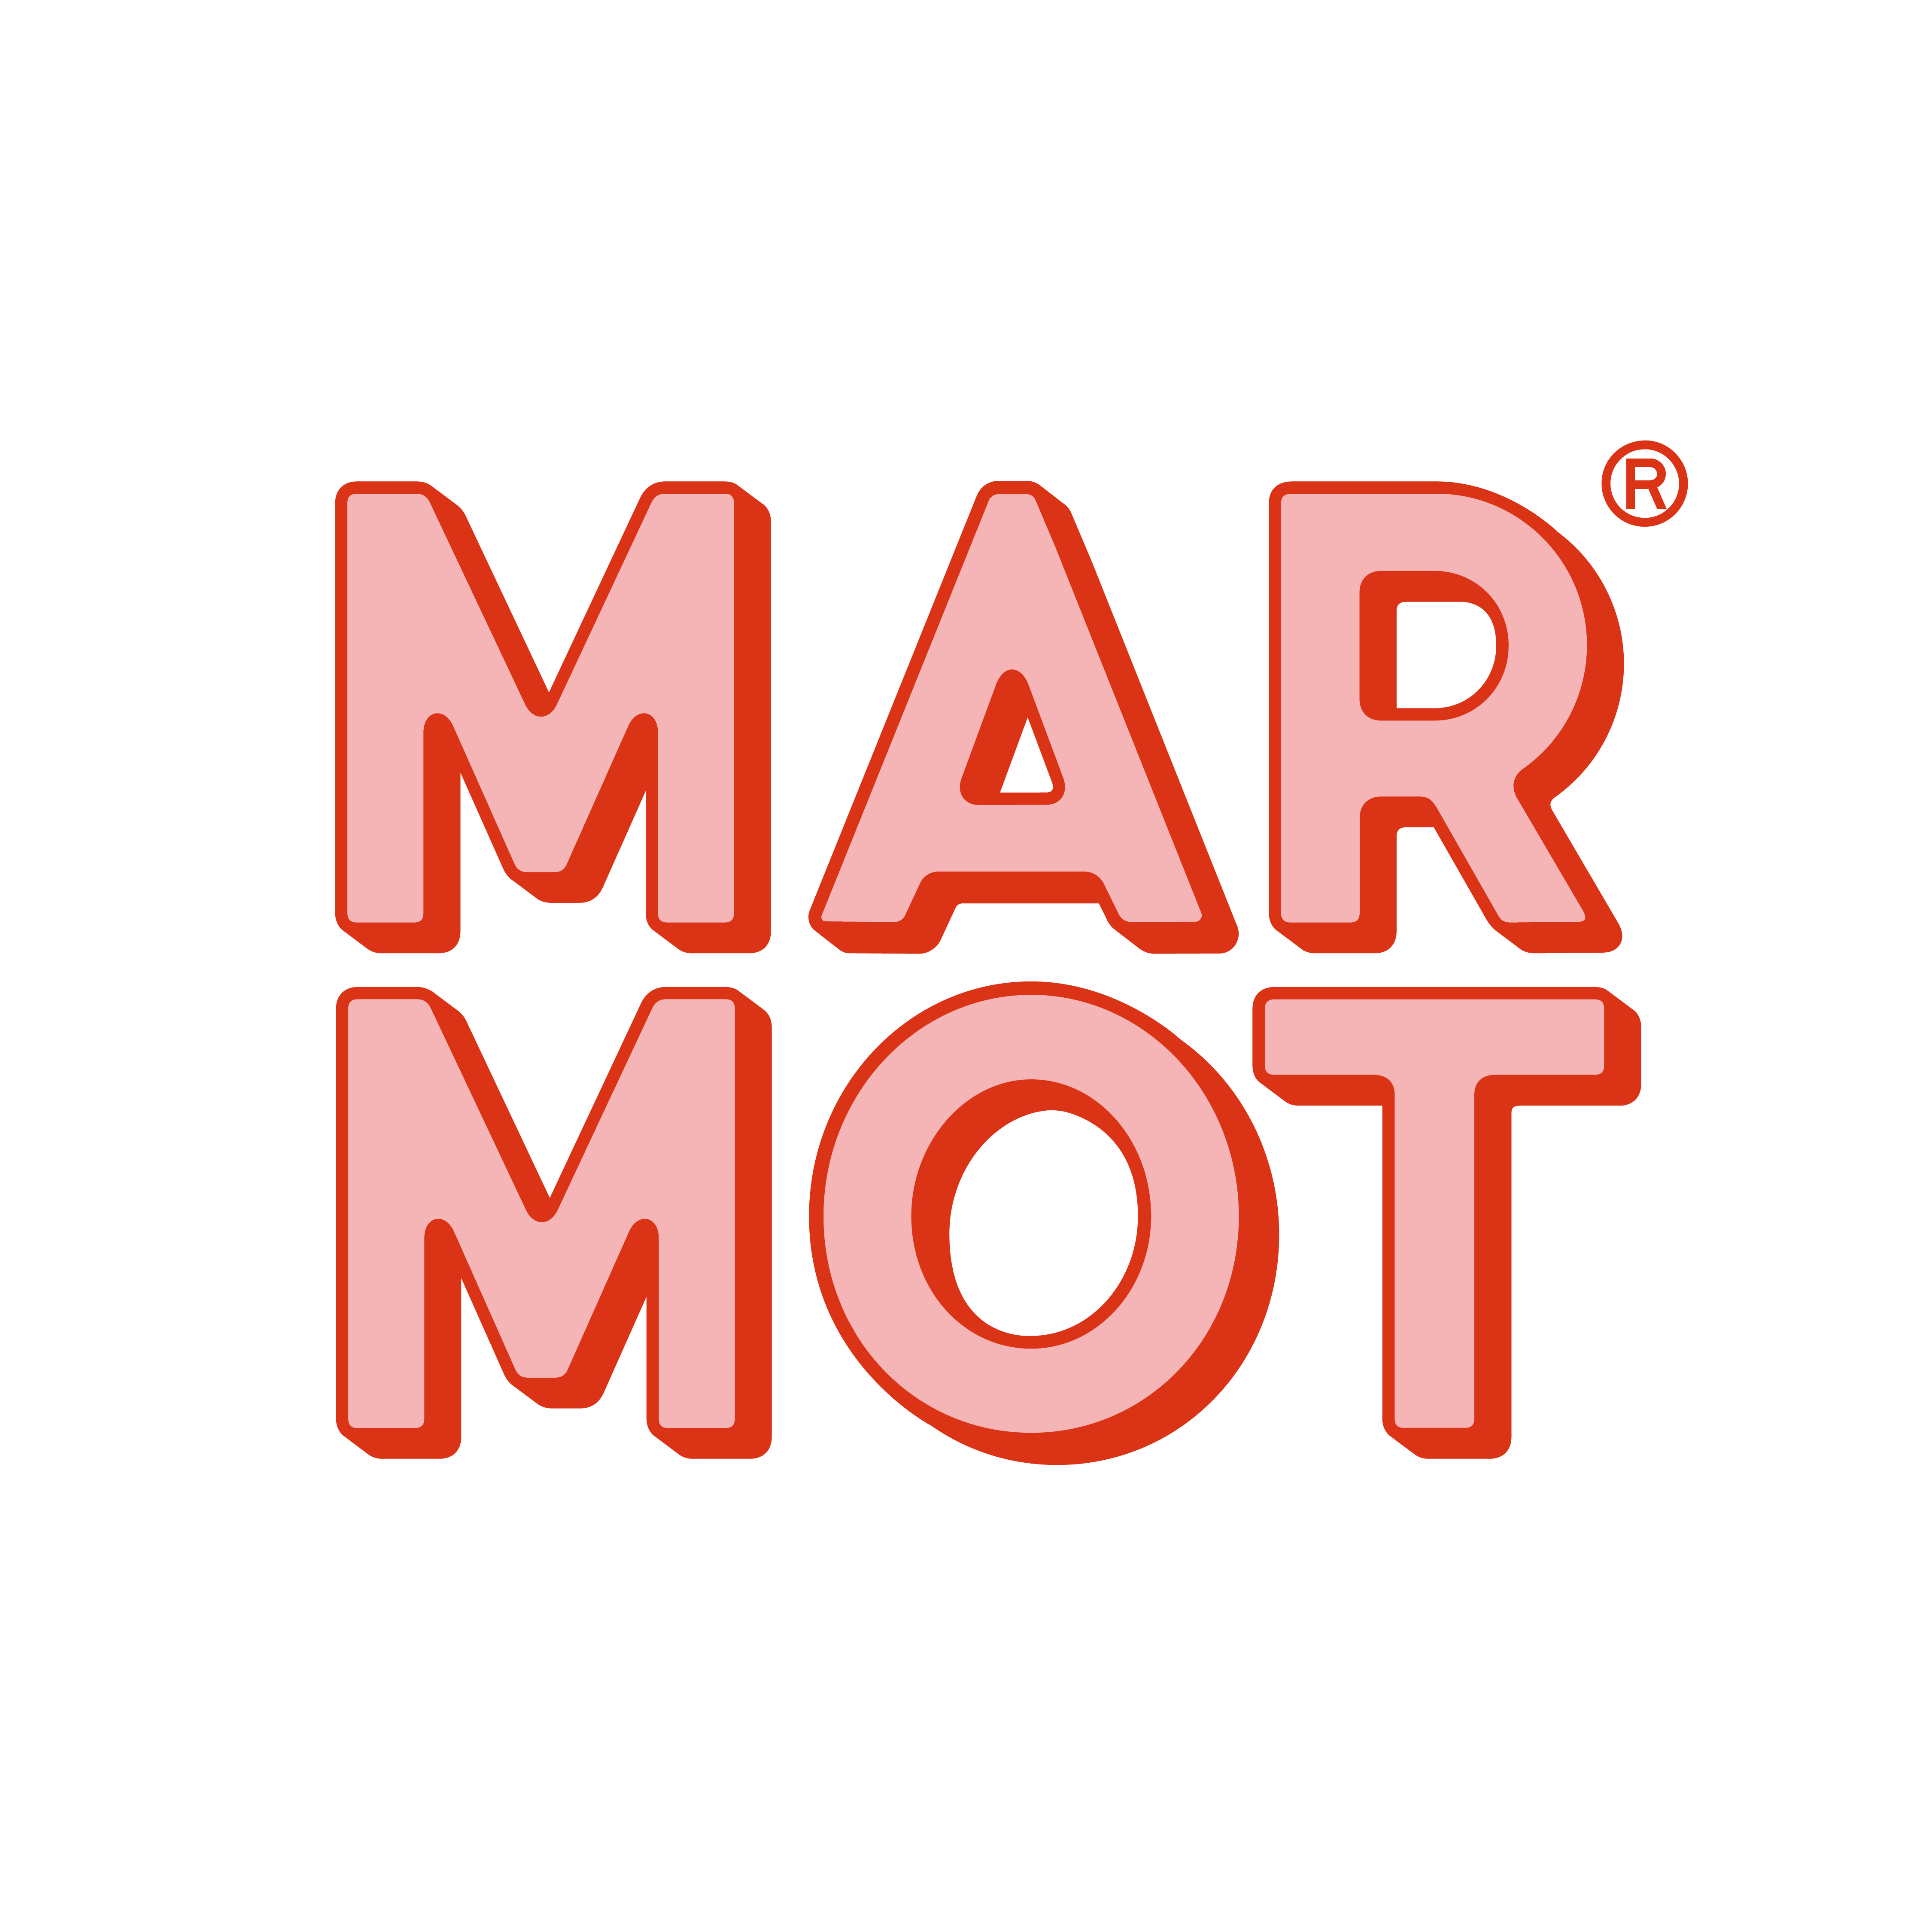 Marmot Logo